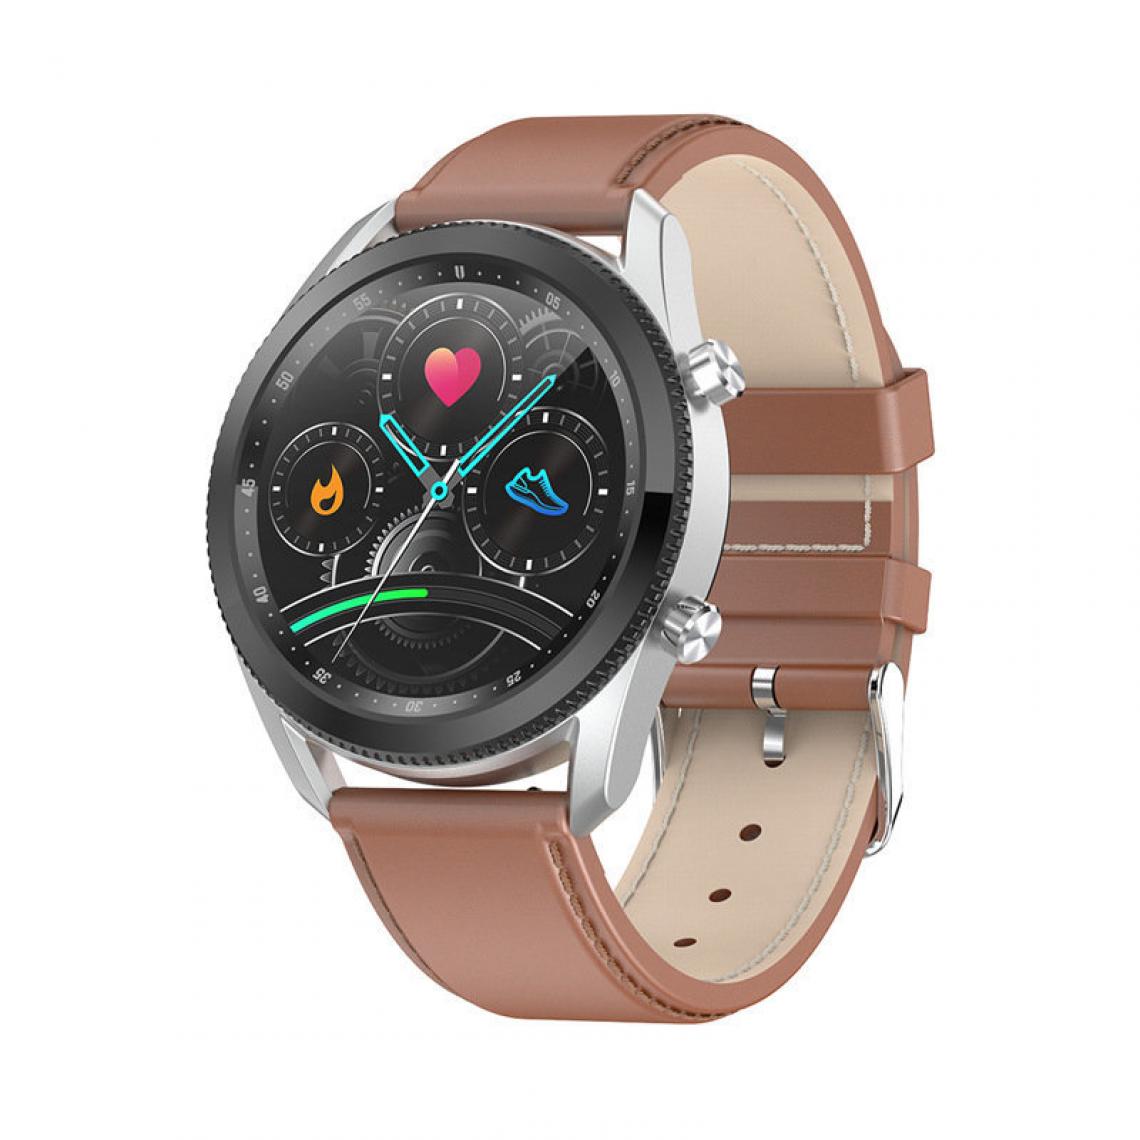 Chronotech Montres - Chronus Smart Watch Women Man 1.28 Inch Smart Watch Smartwatch with Heart Rate Monitor(Brown) - Montre connectée